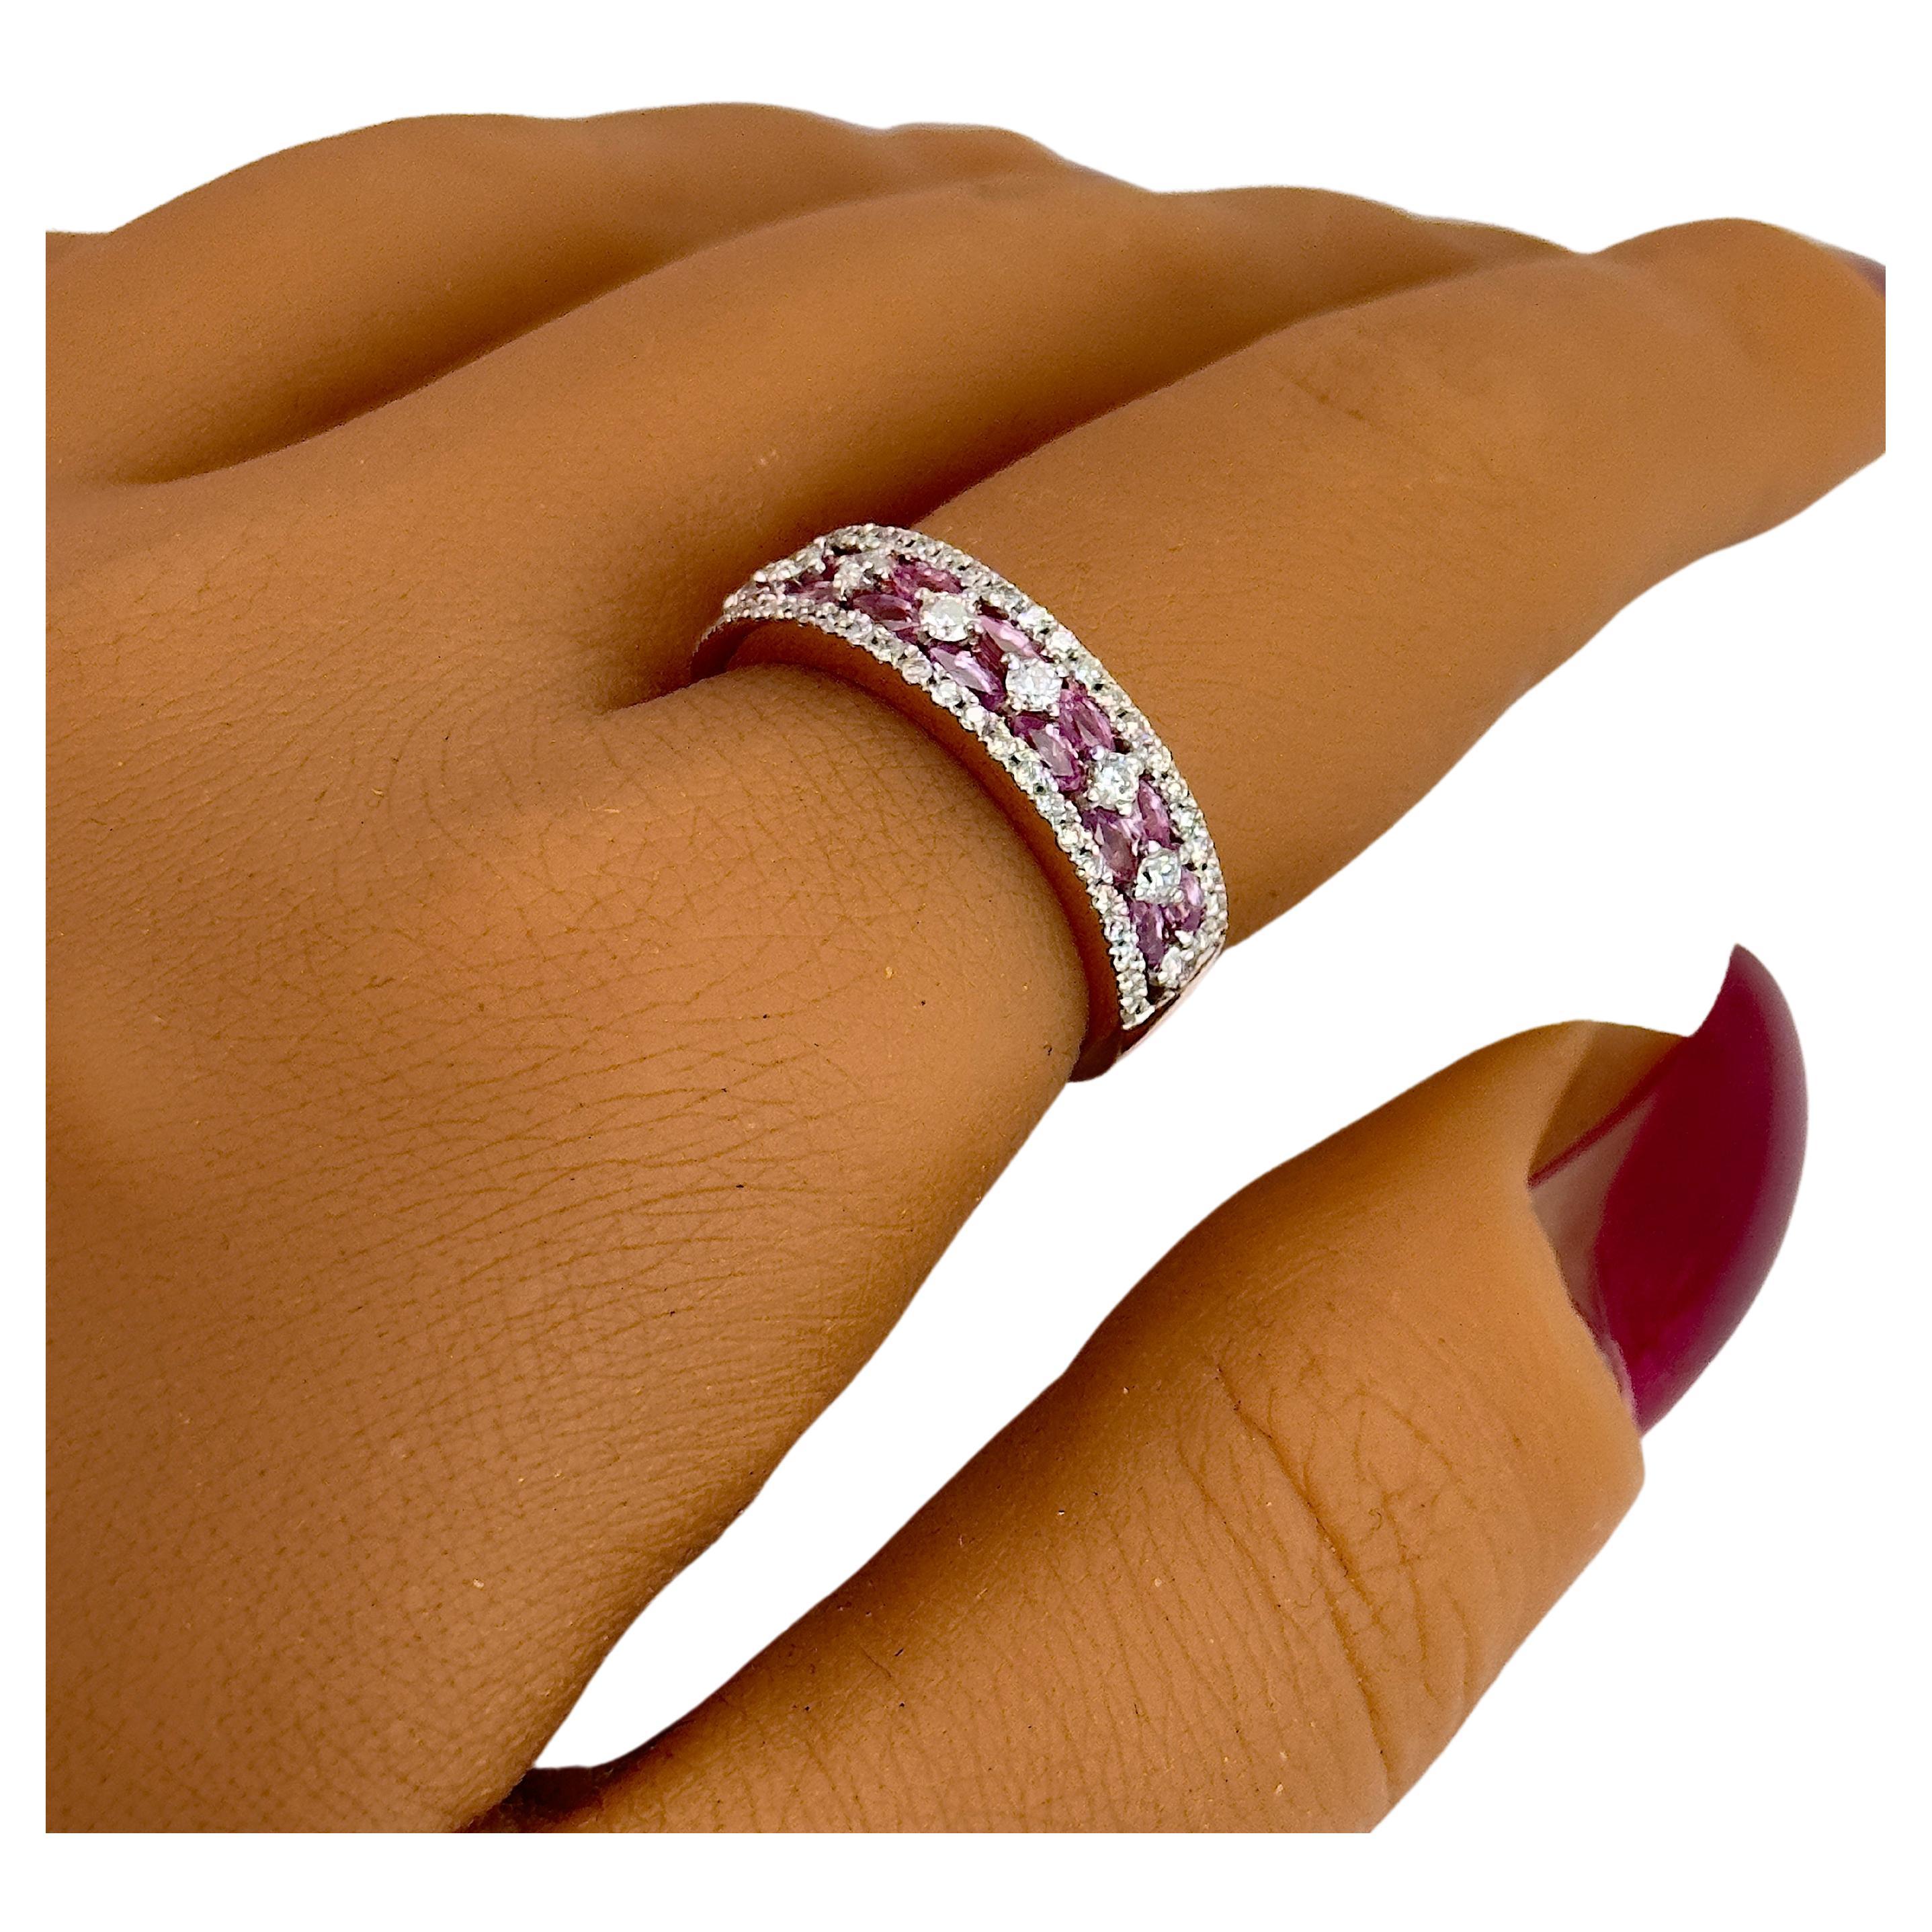 Pink Sapphire and Diamond Half Band with Natural Gemstones, Minimalist Ring 14k